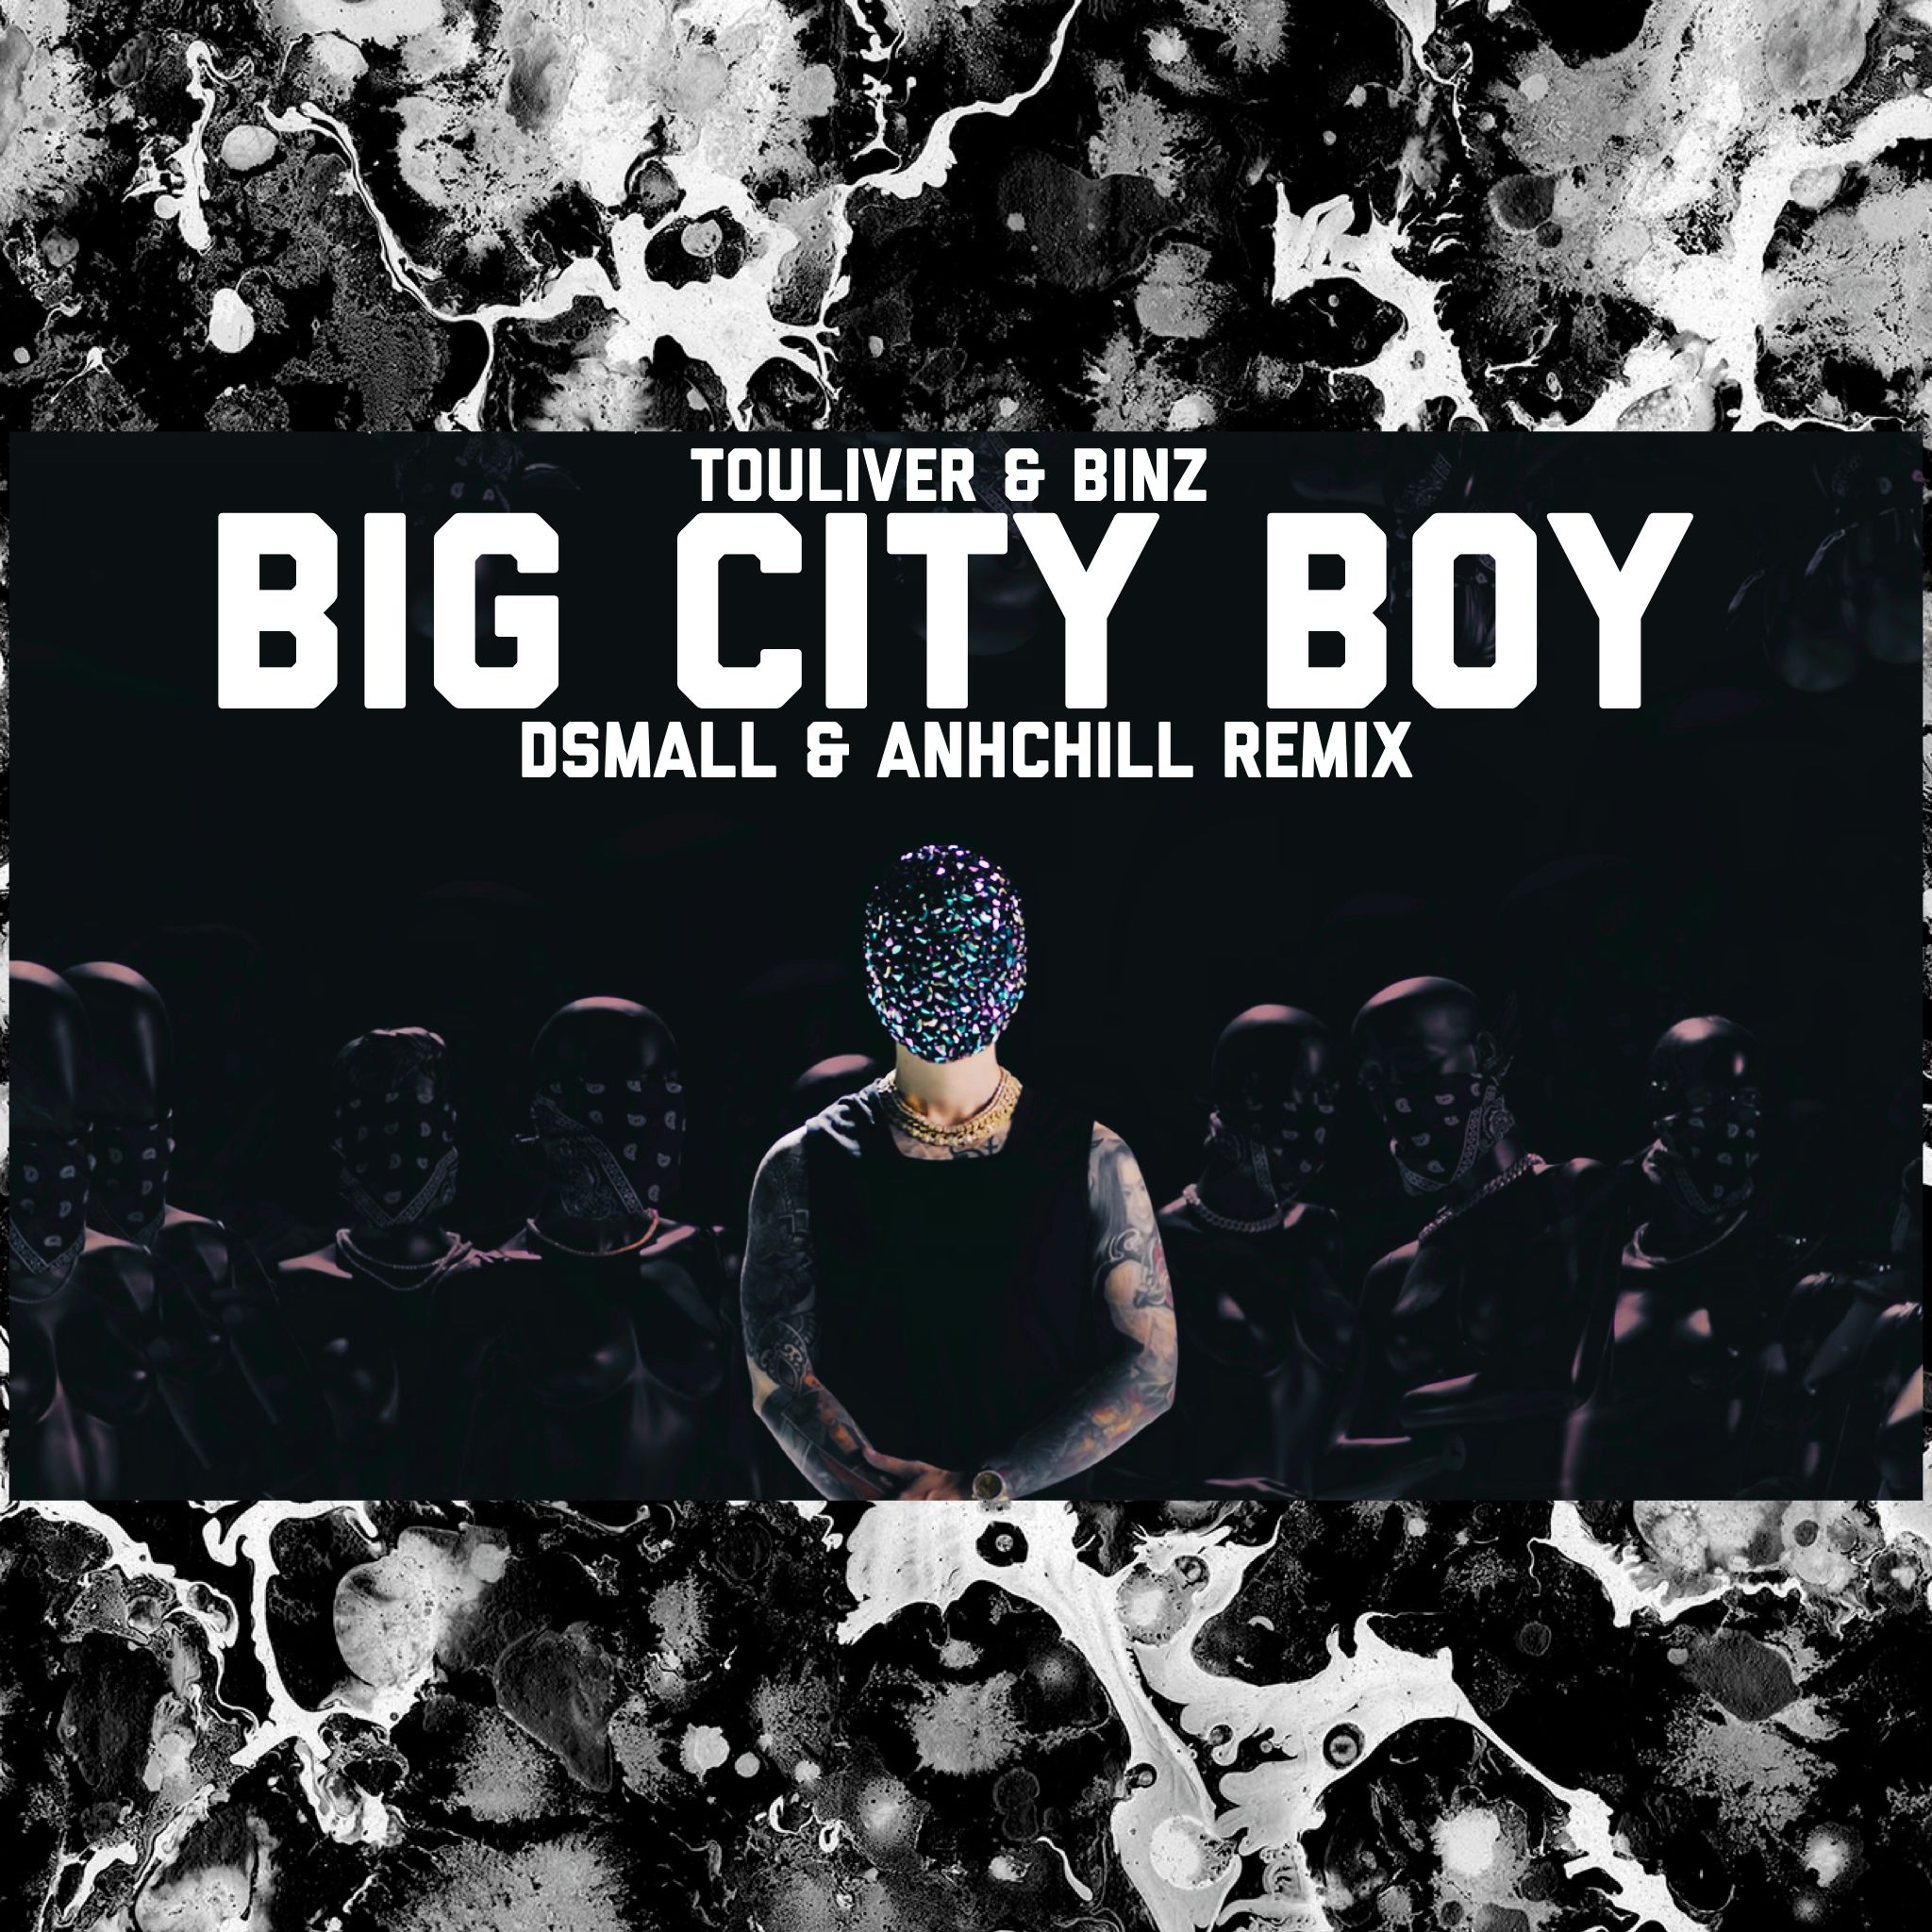 Download TOULIVER & BINZ - BIG CITY BOY (DSMALL & ANHCHILL REMIX)